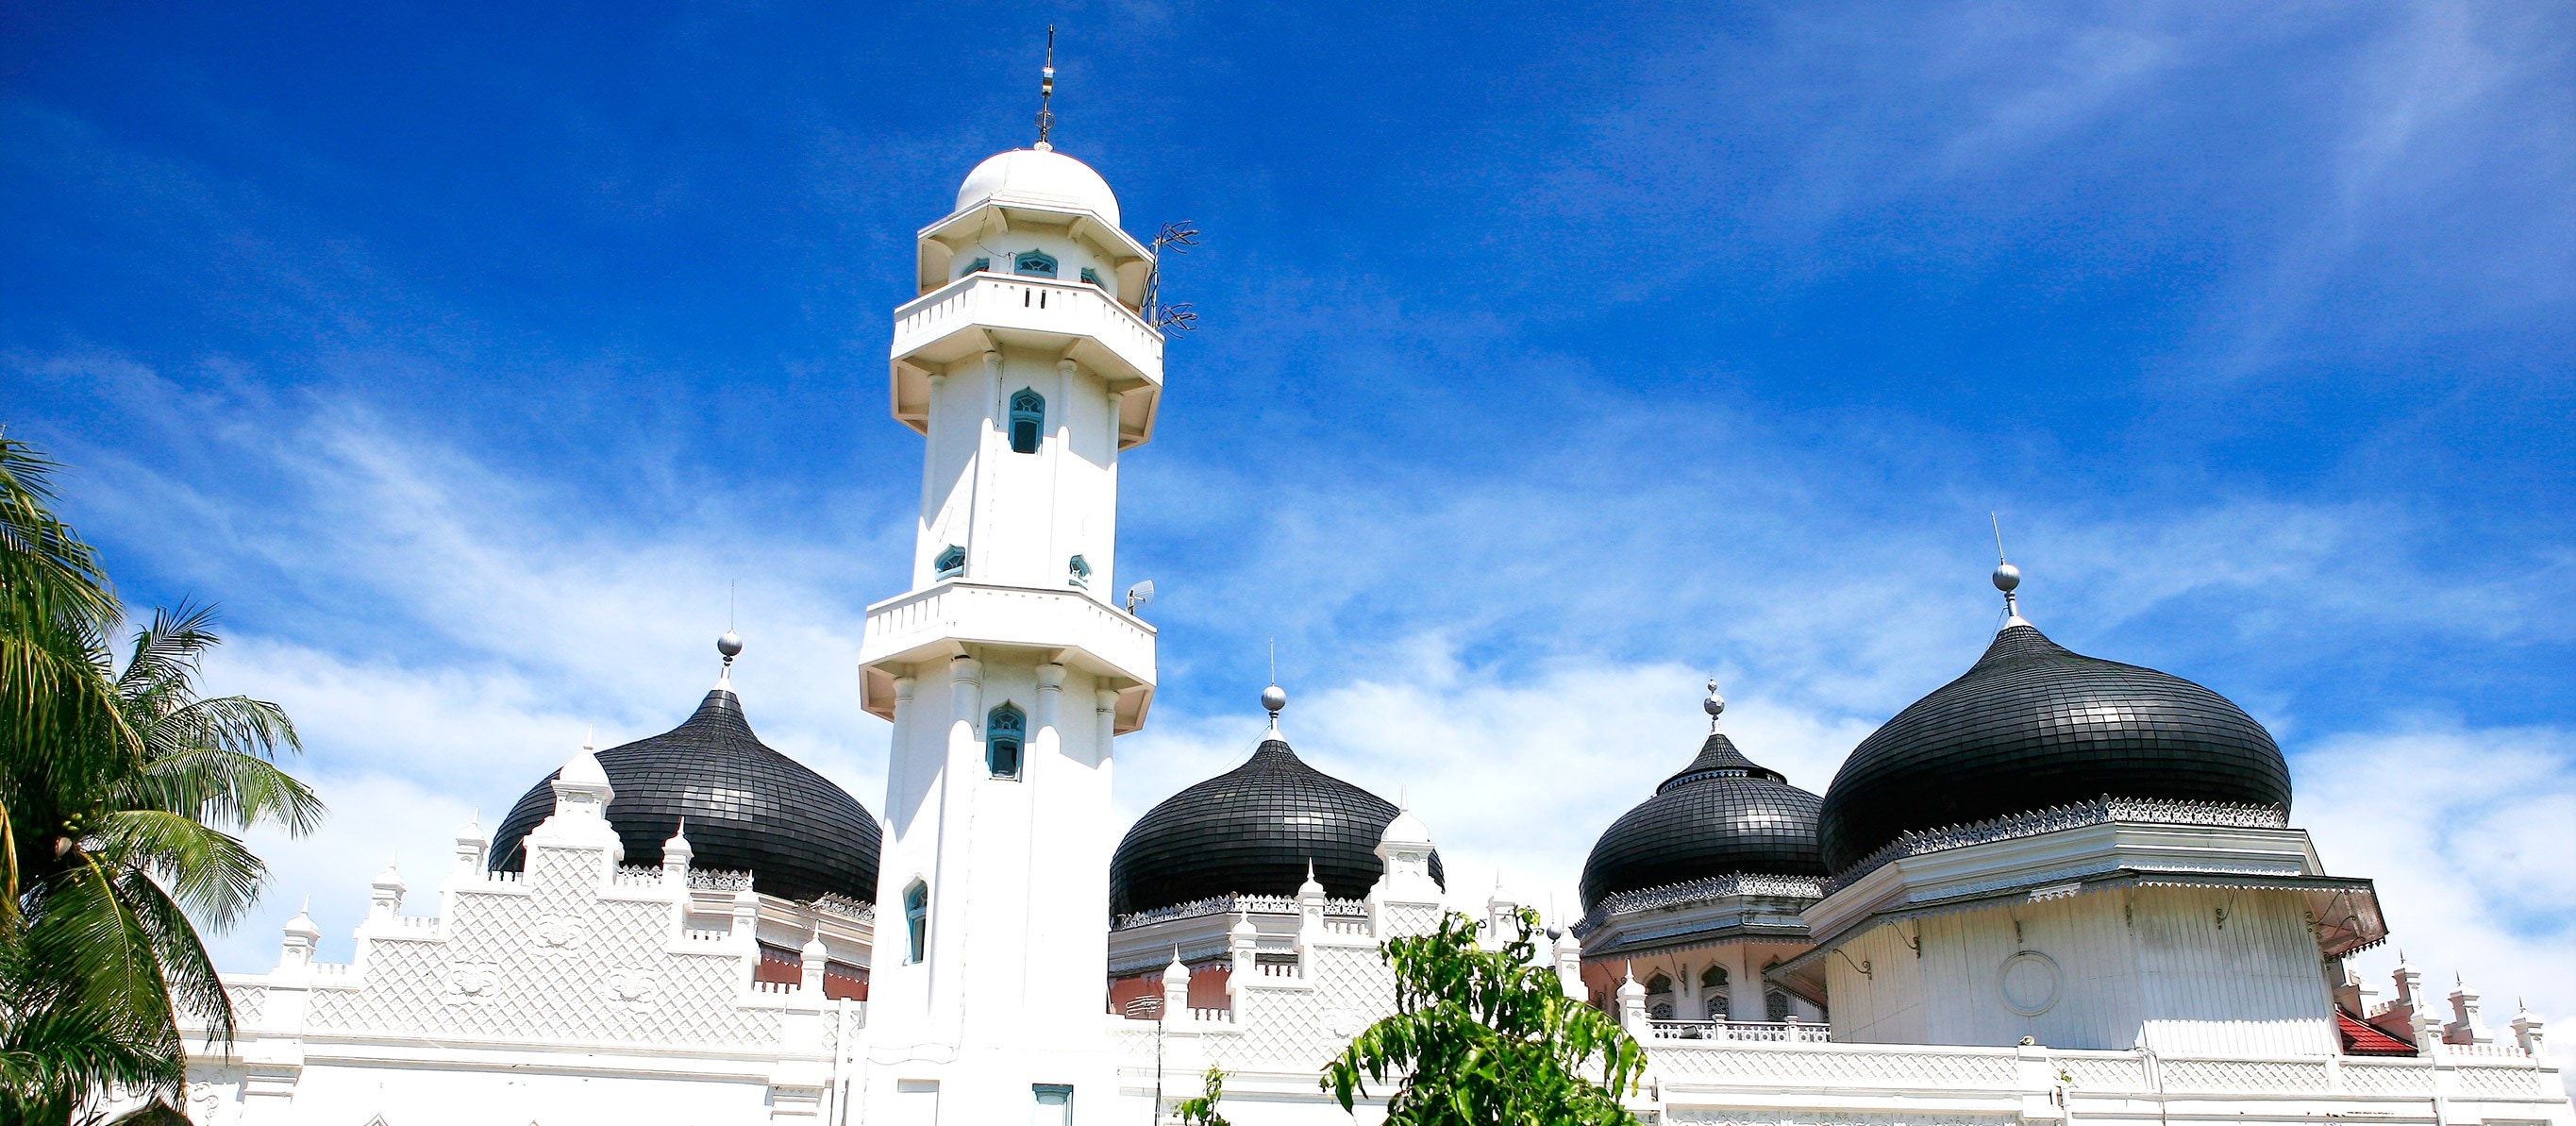 The Grand Mosque of Baiturrahman